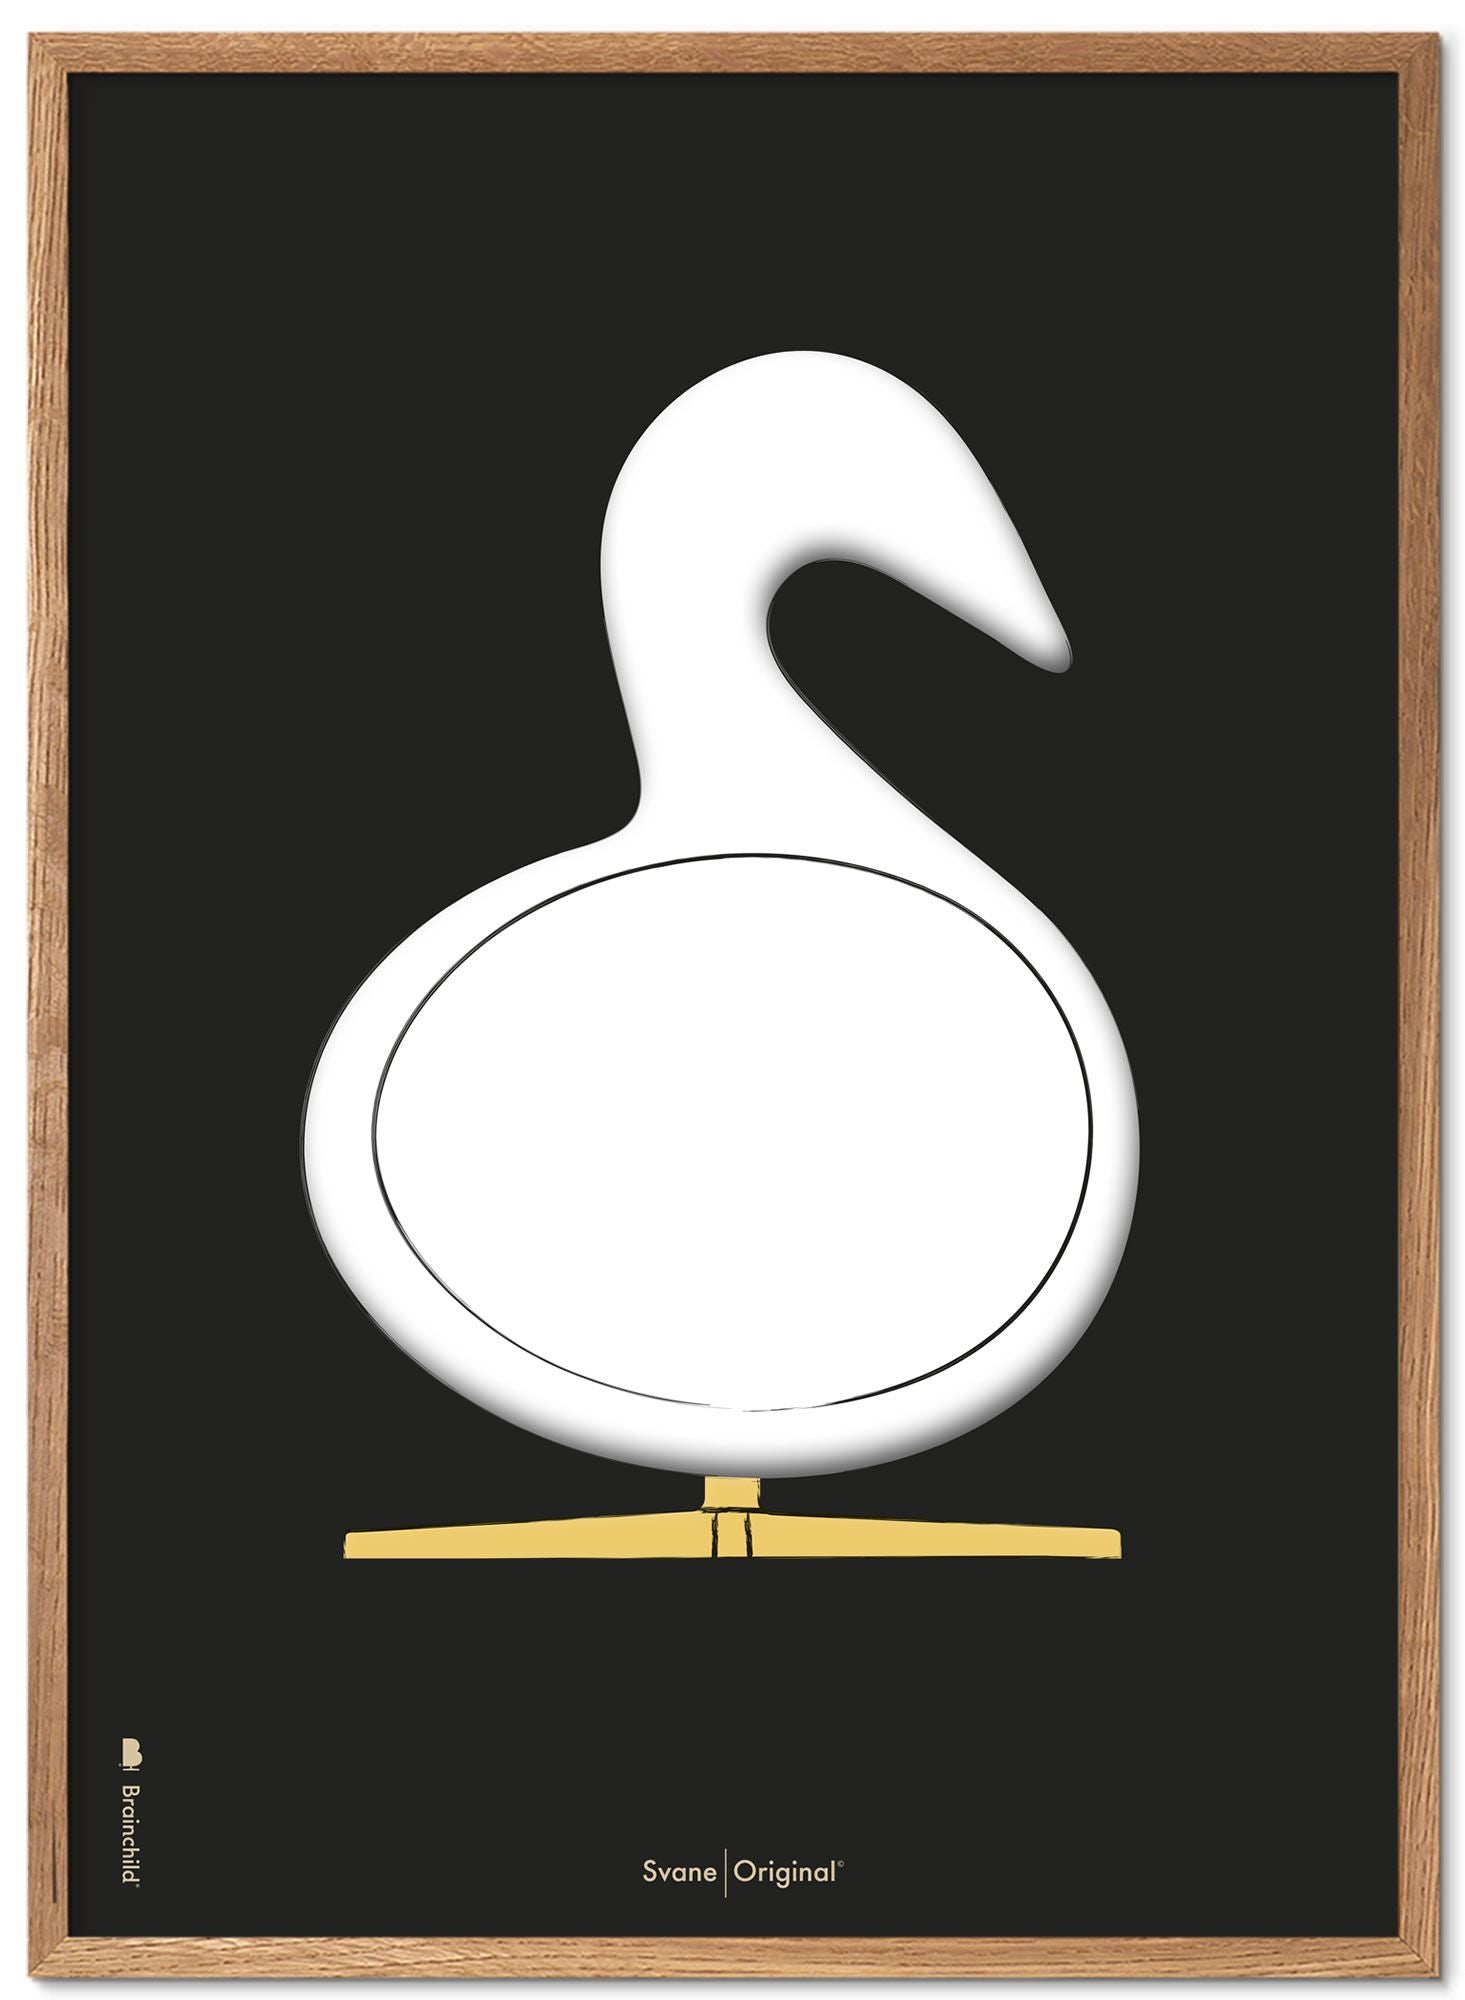 Brainchild Swan Design Sketch Poster Frame Made of Light Wood A5, svart bakgrund